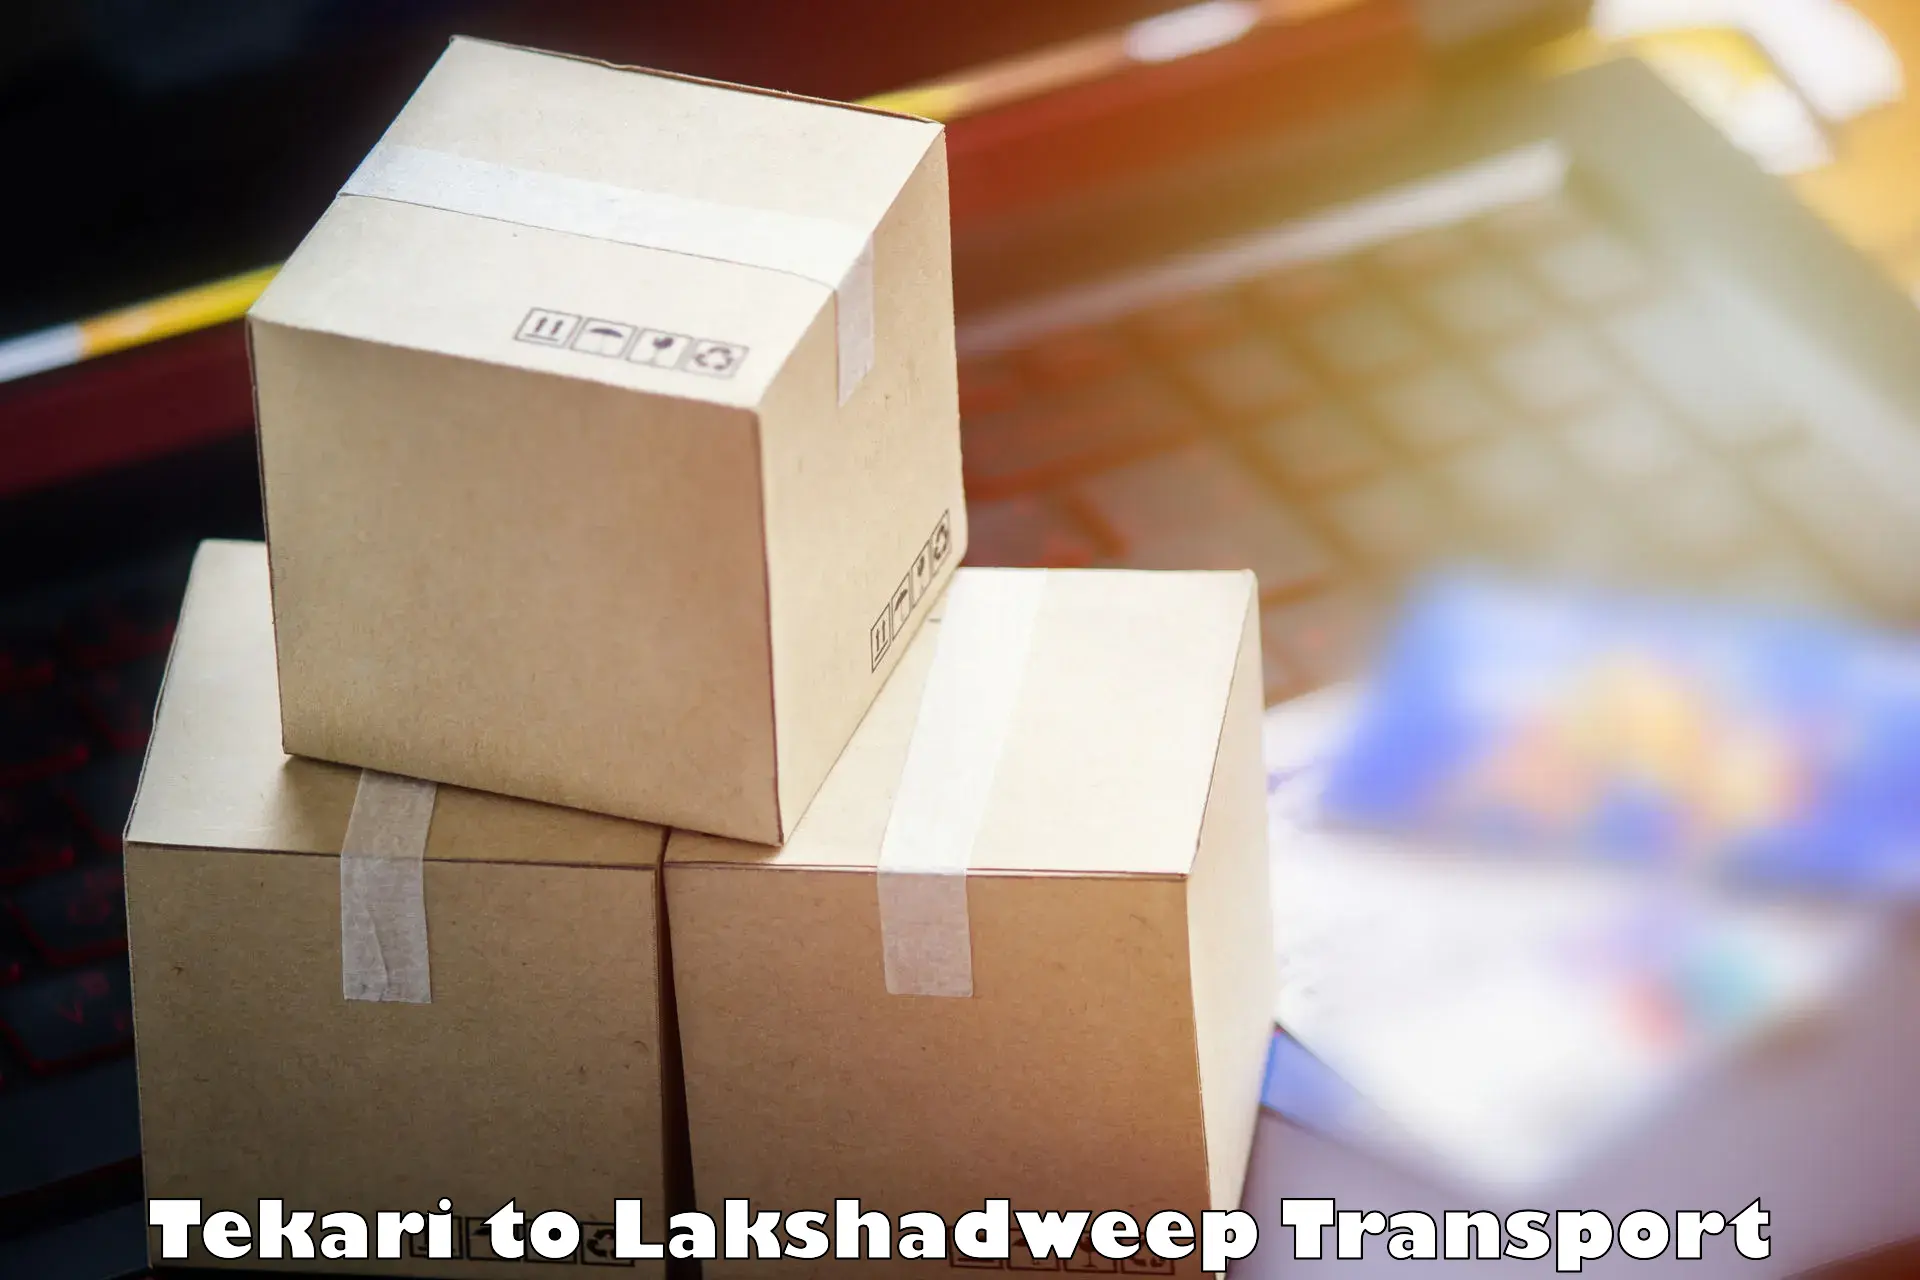 Transport shared services Tekari to Lakshadweep